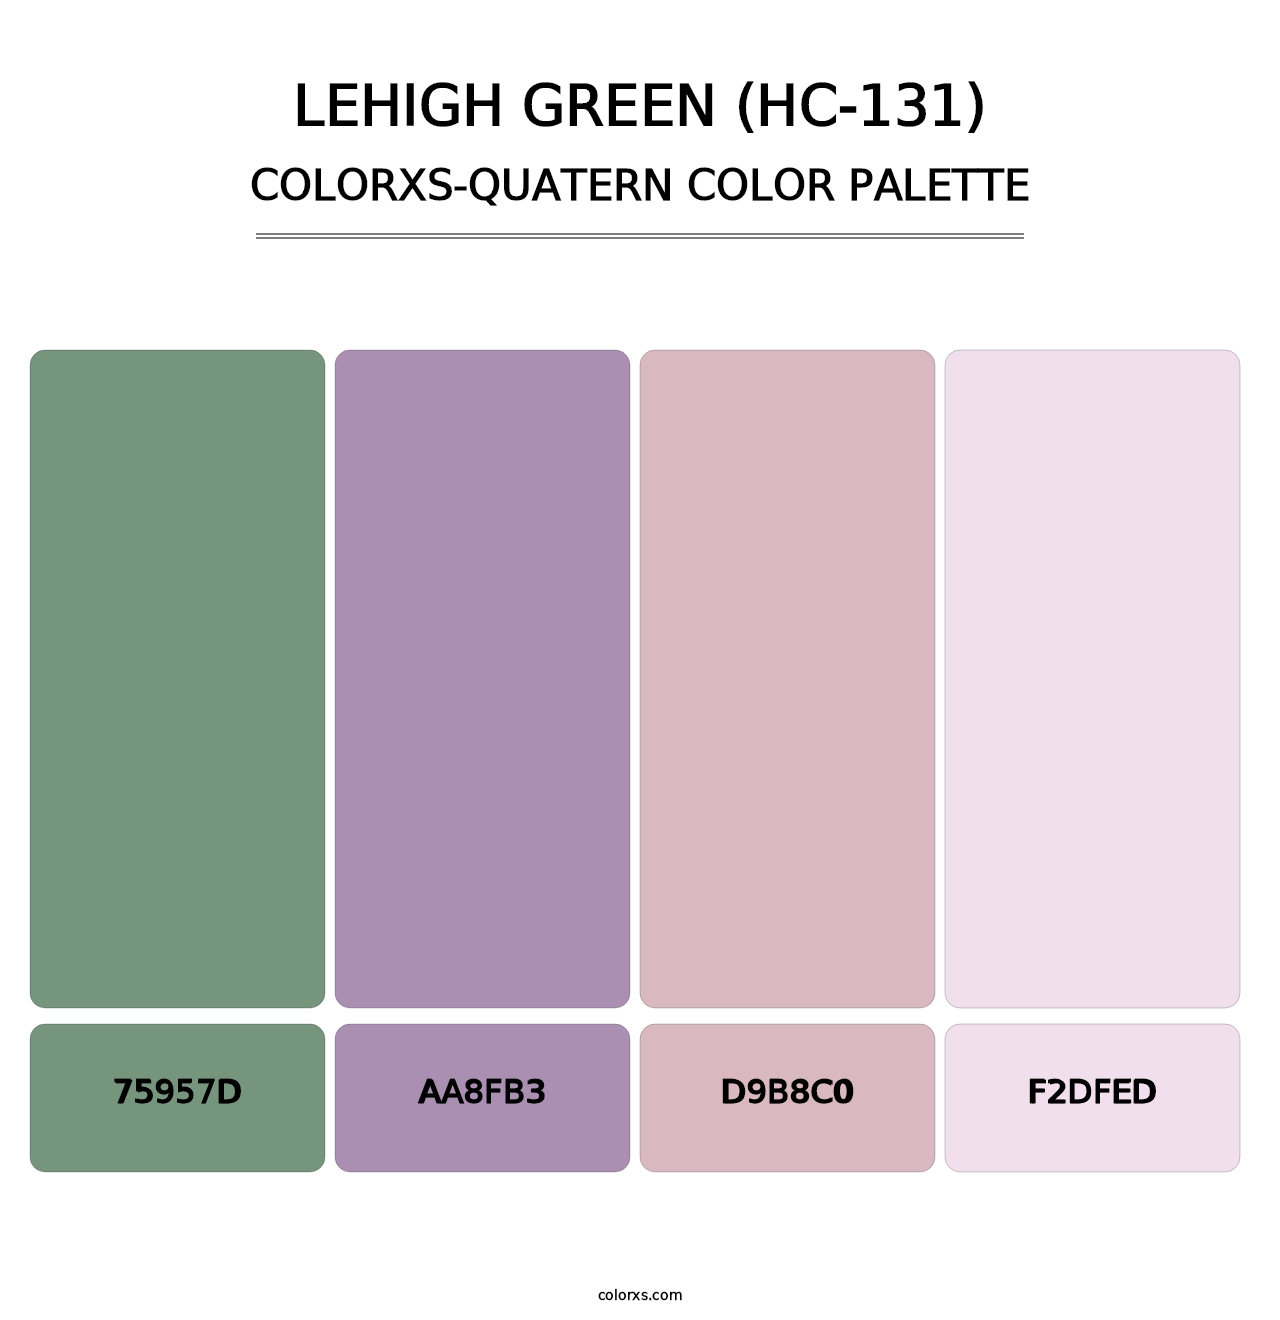 Lehigh Green (HC-131) - Colorxs Quatern Palette